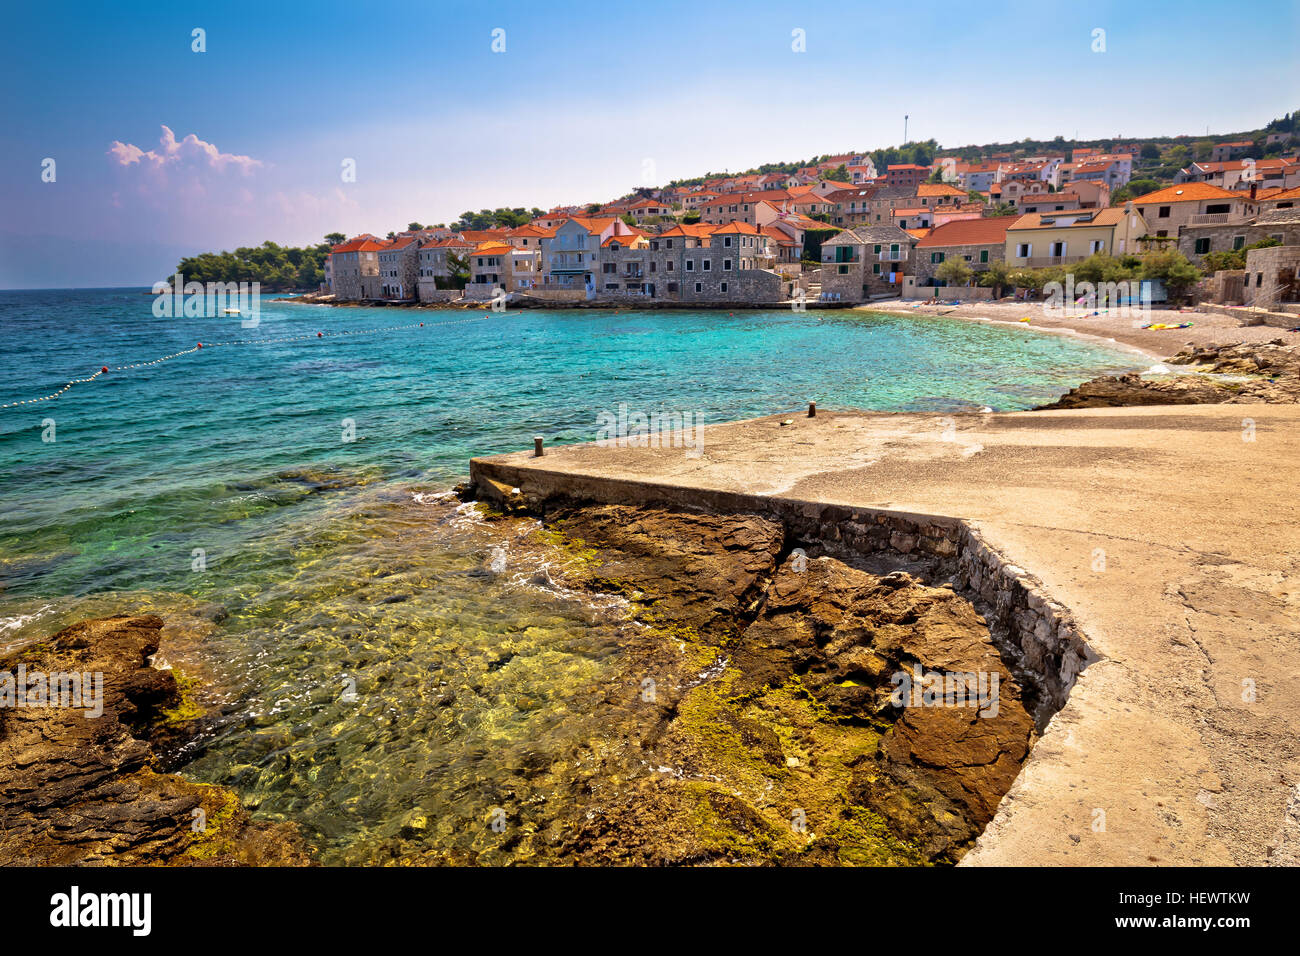 Village of Postira on Brac island, Dalmatia, Croatia Stock Photo